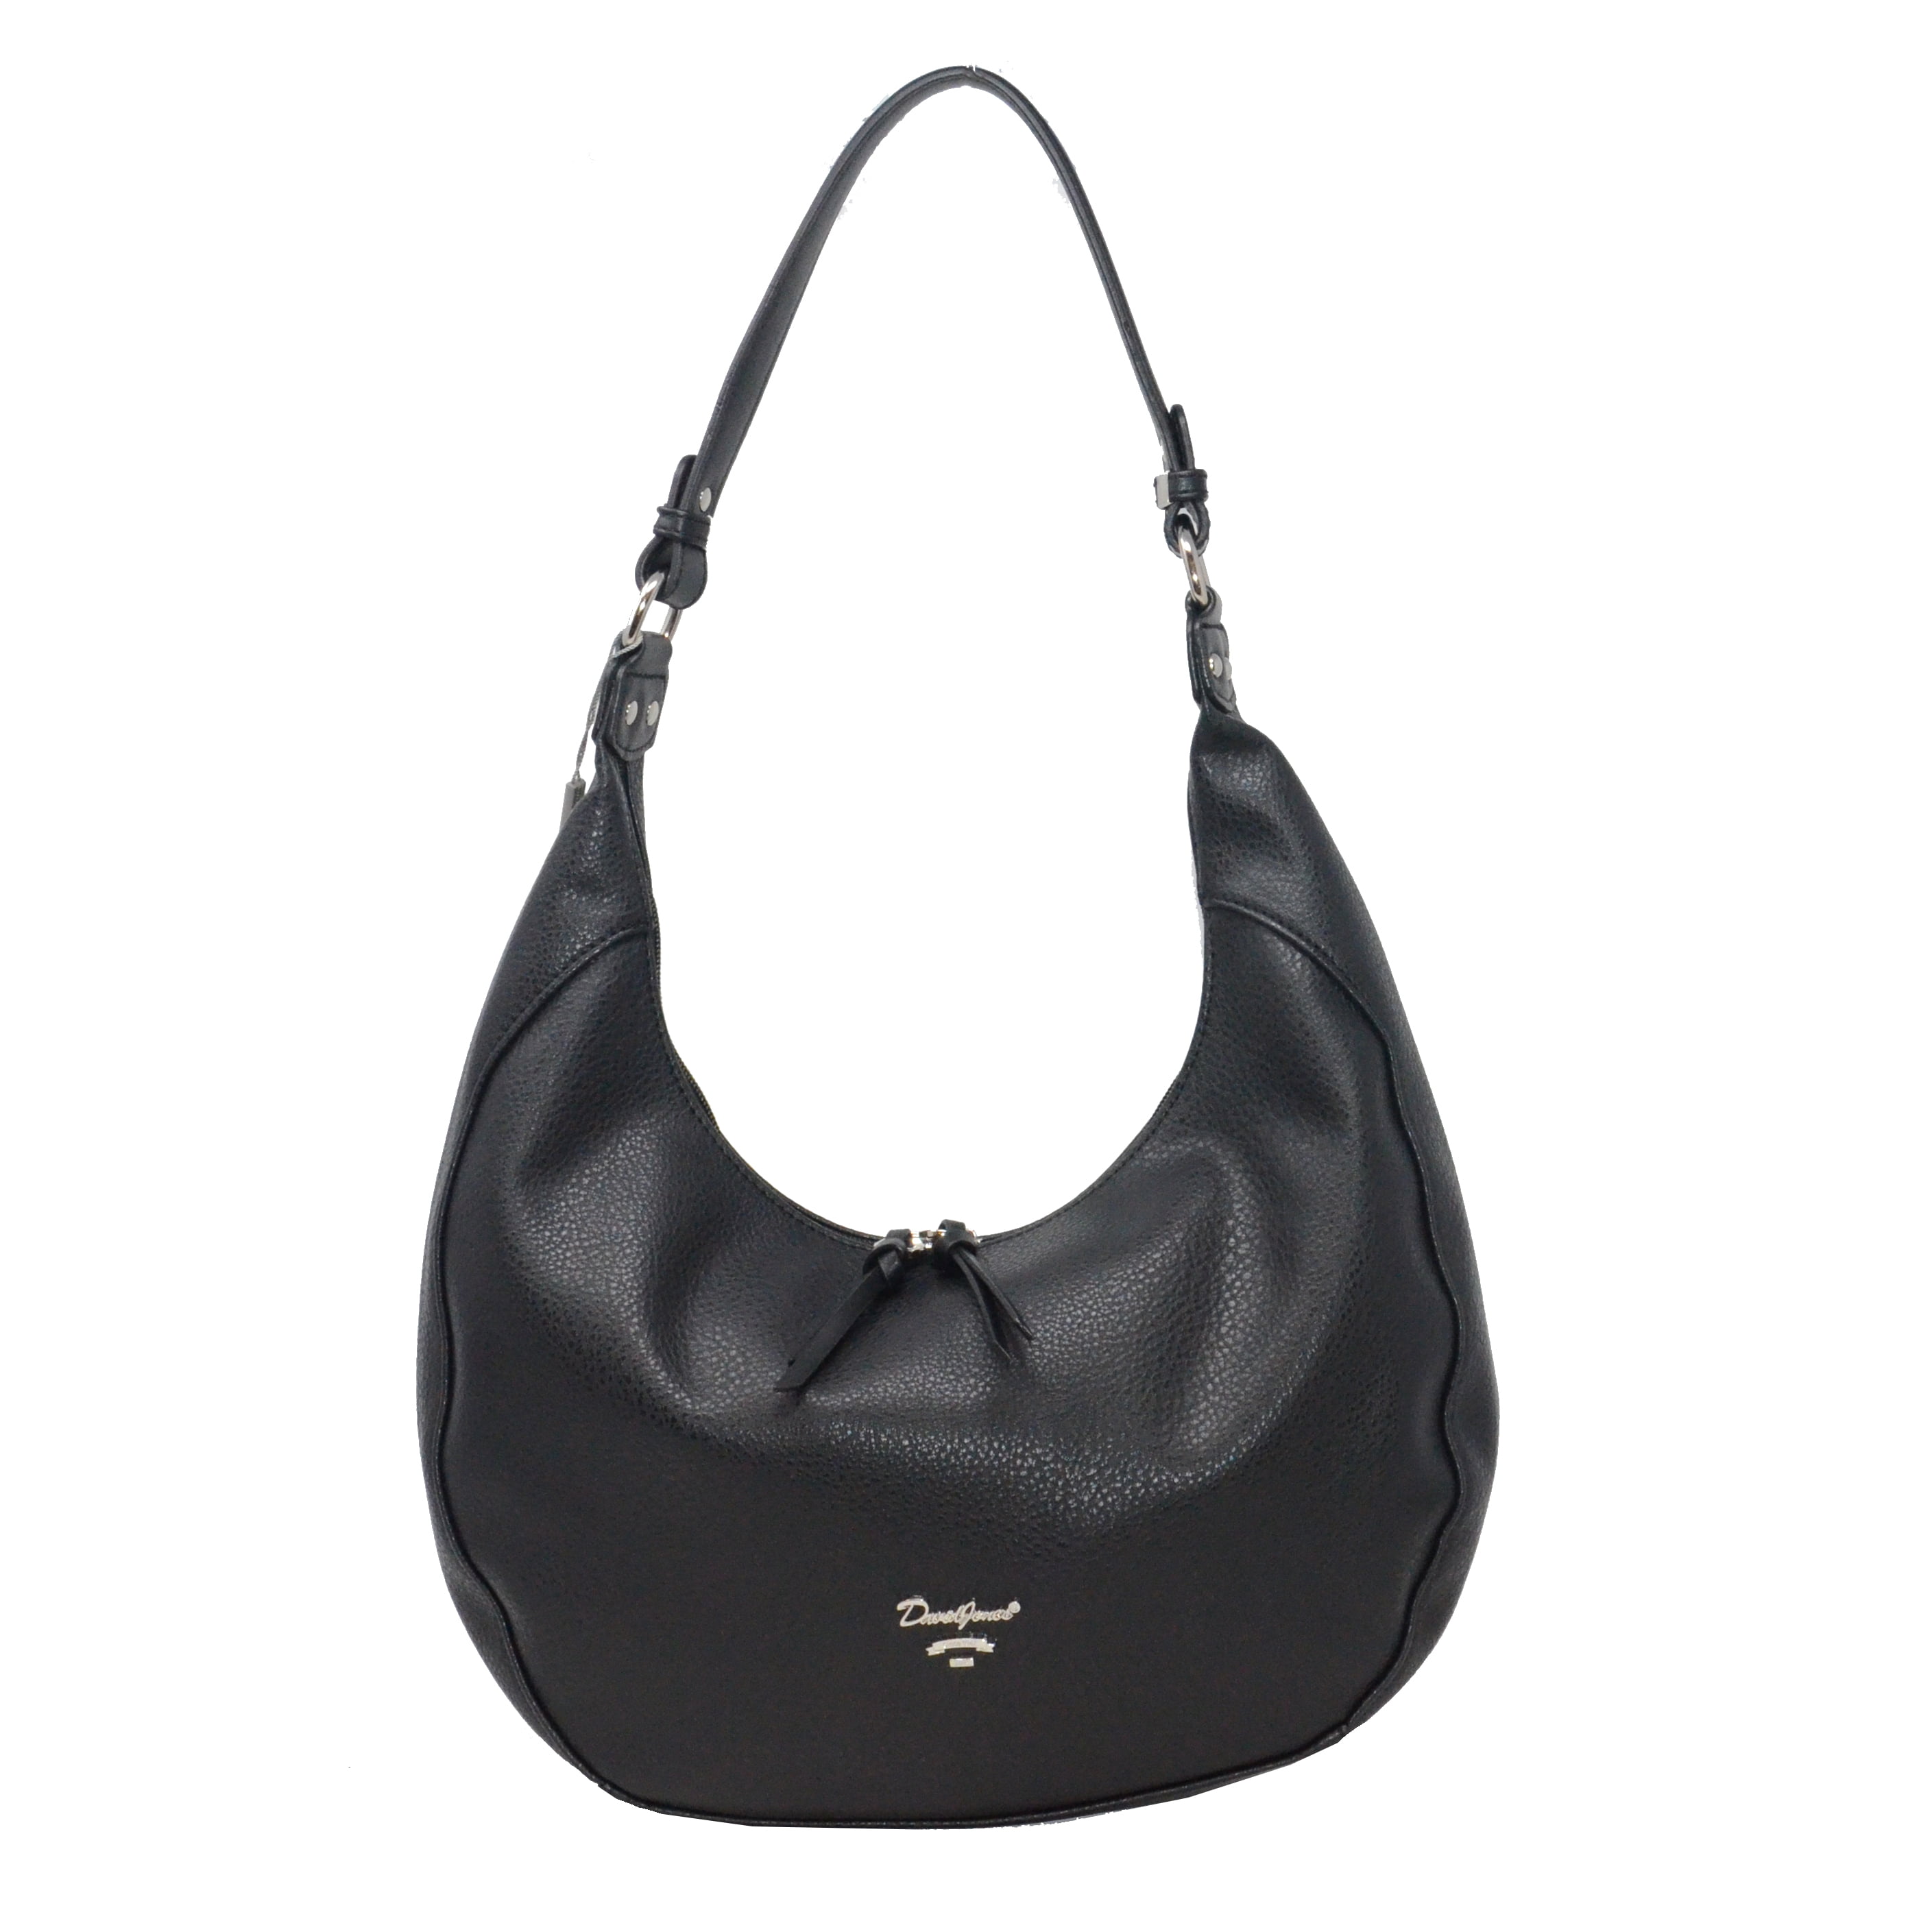 DAVIDJONES women handbag pu leather female crossbody bag large autumn tassel lady shoulder bag 